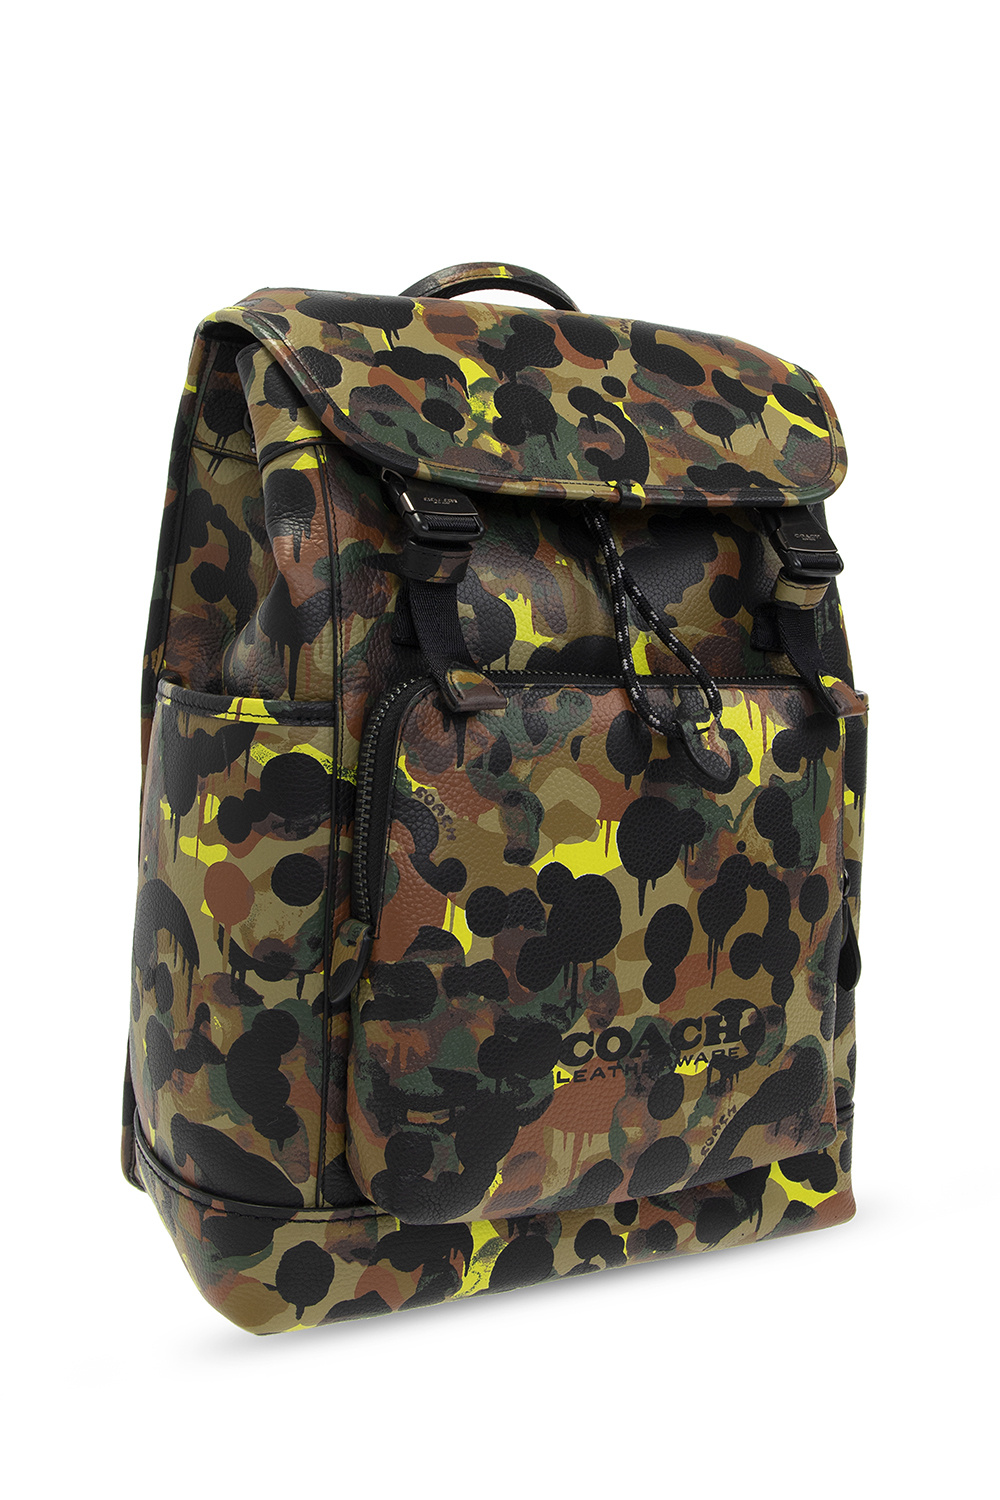 Coach ‘League Flap’ backpack